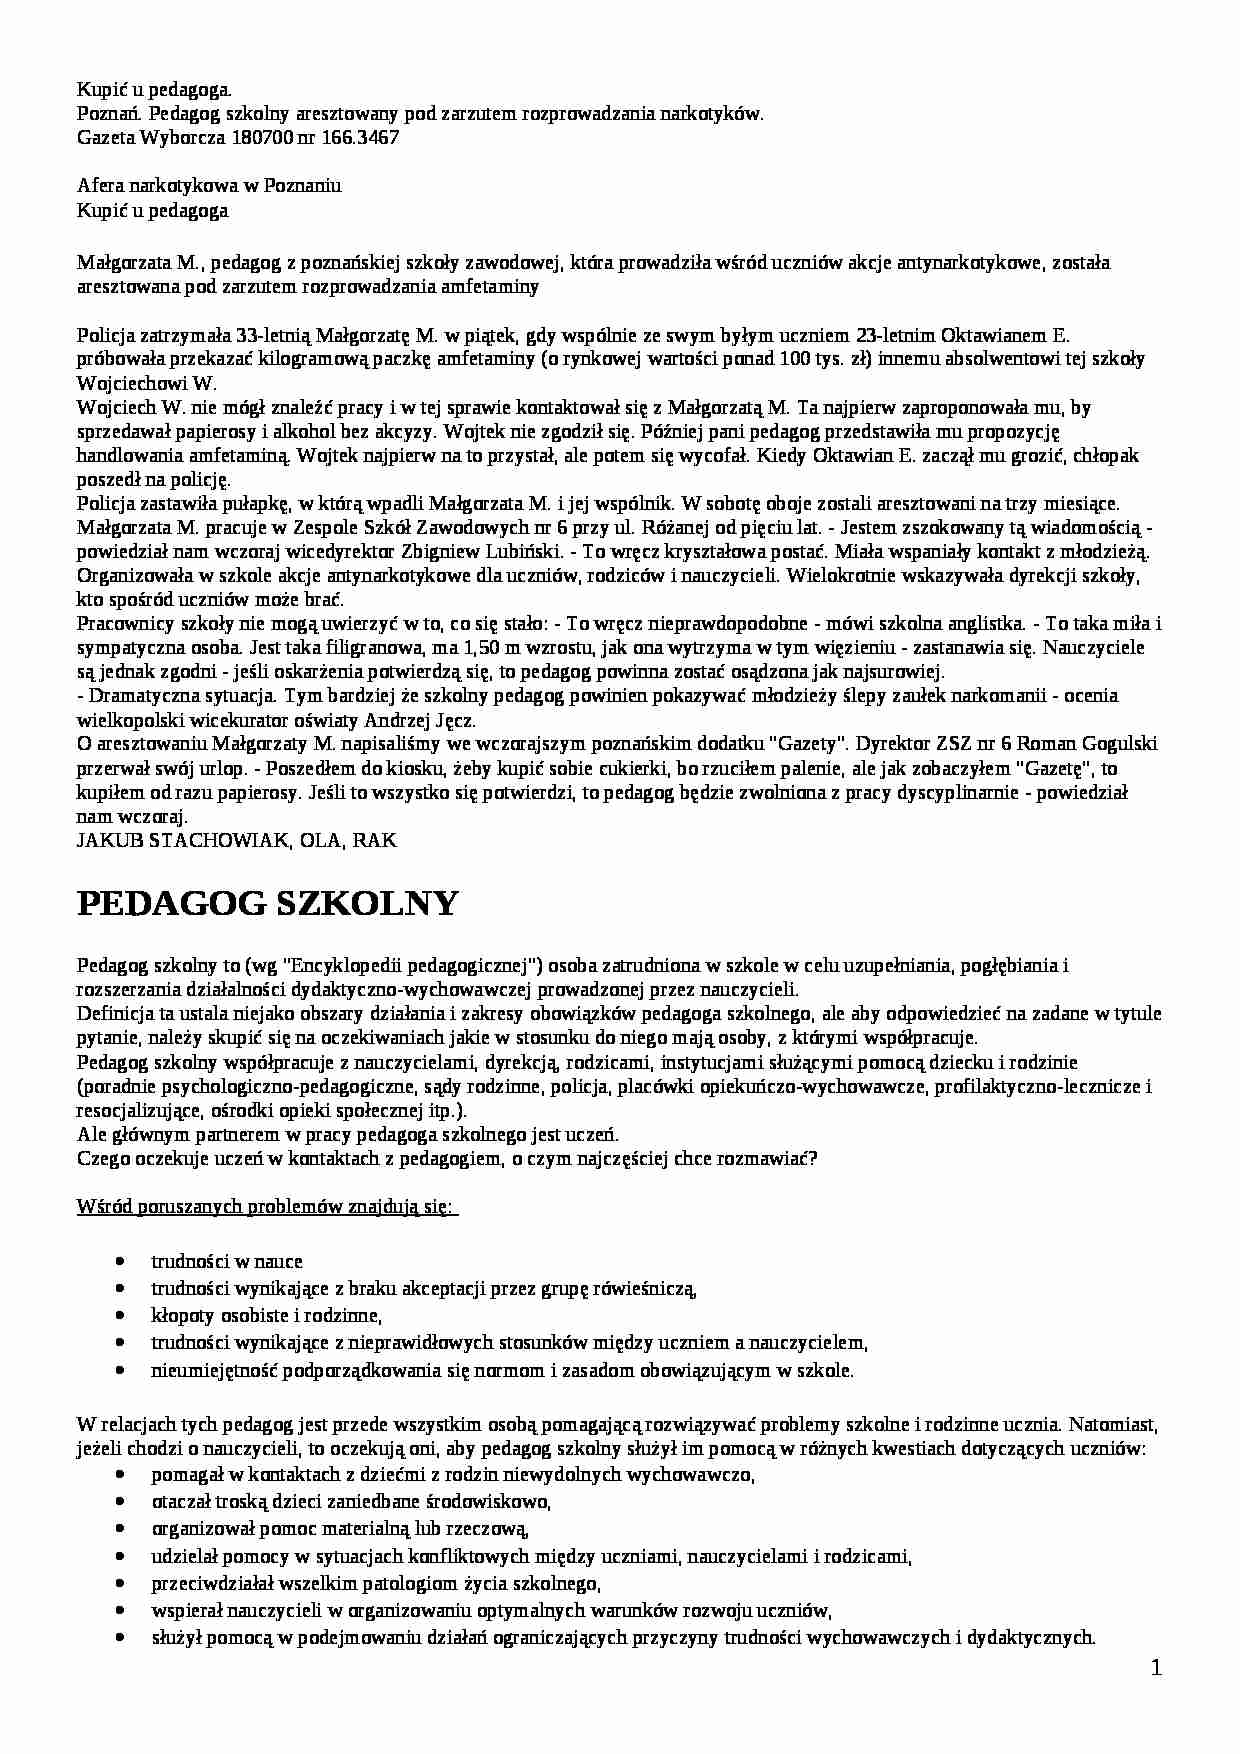 PEDAGOG SZKOLNY- pedagogika - strona 1